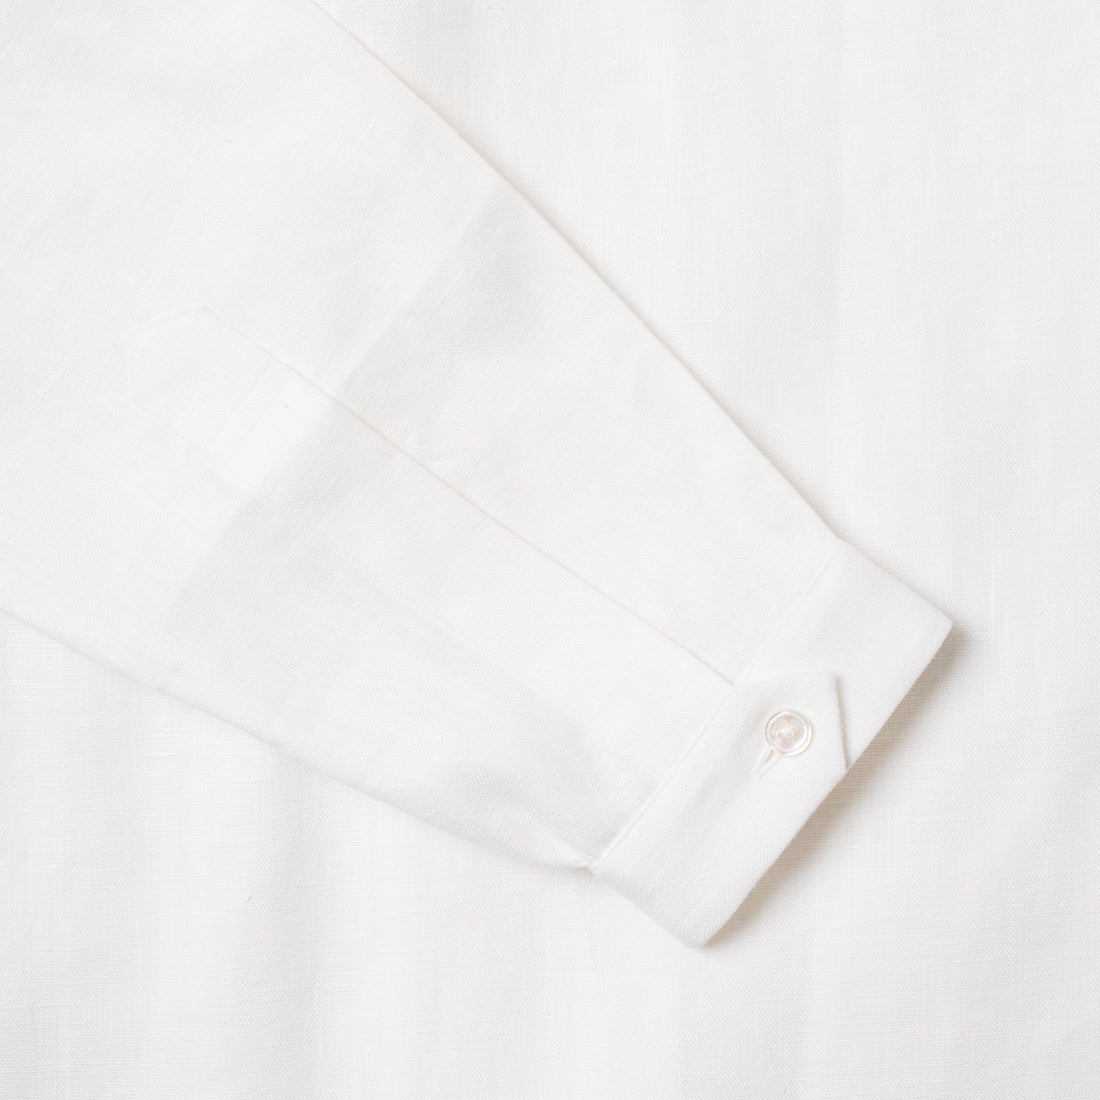 Bryceland's Cabana Shirt White